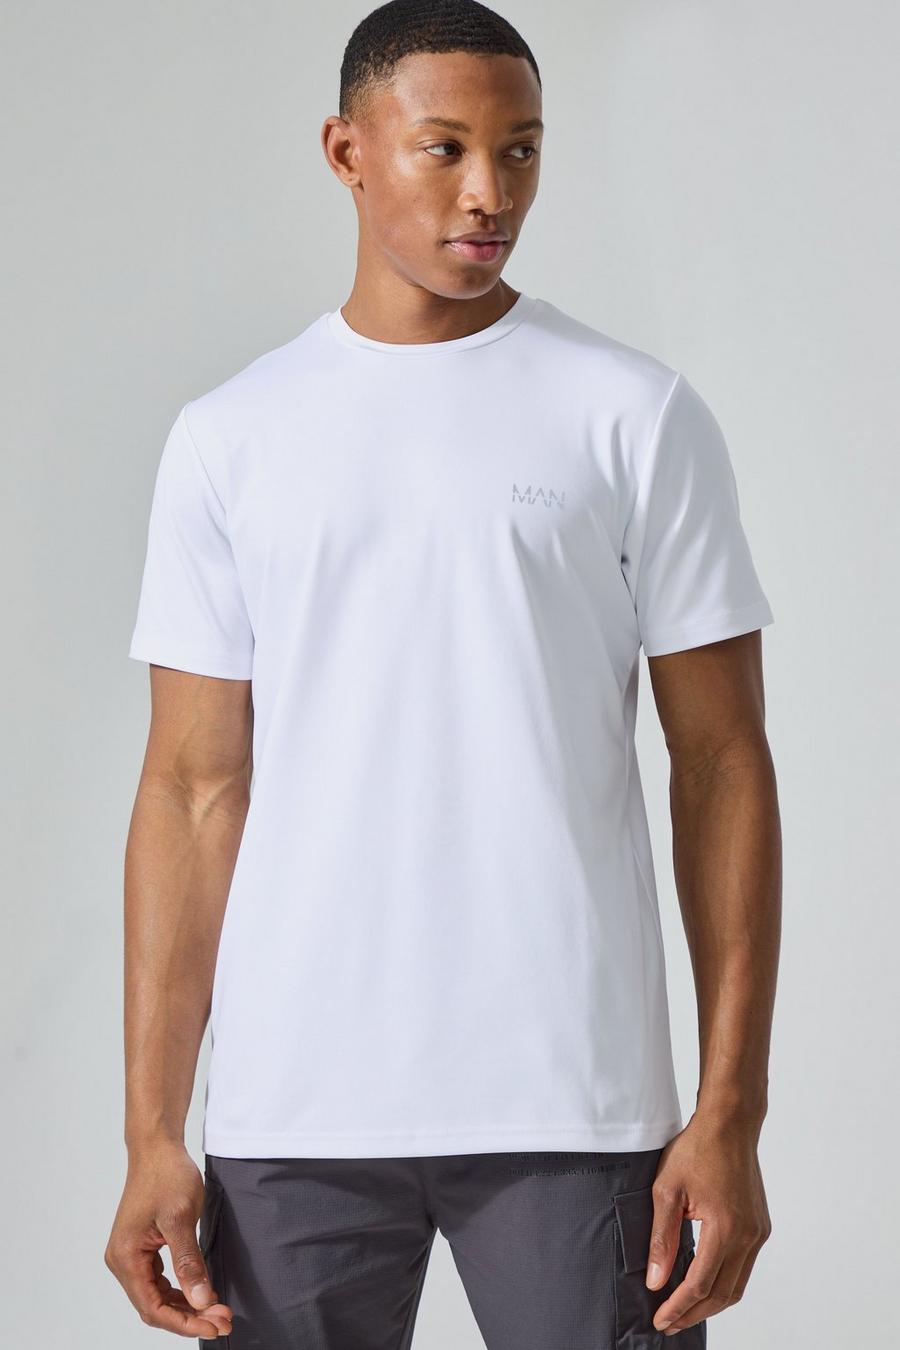 White Nike Kaiser Chiefs Home Shirt 2019 2020 Junior